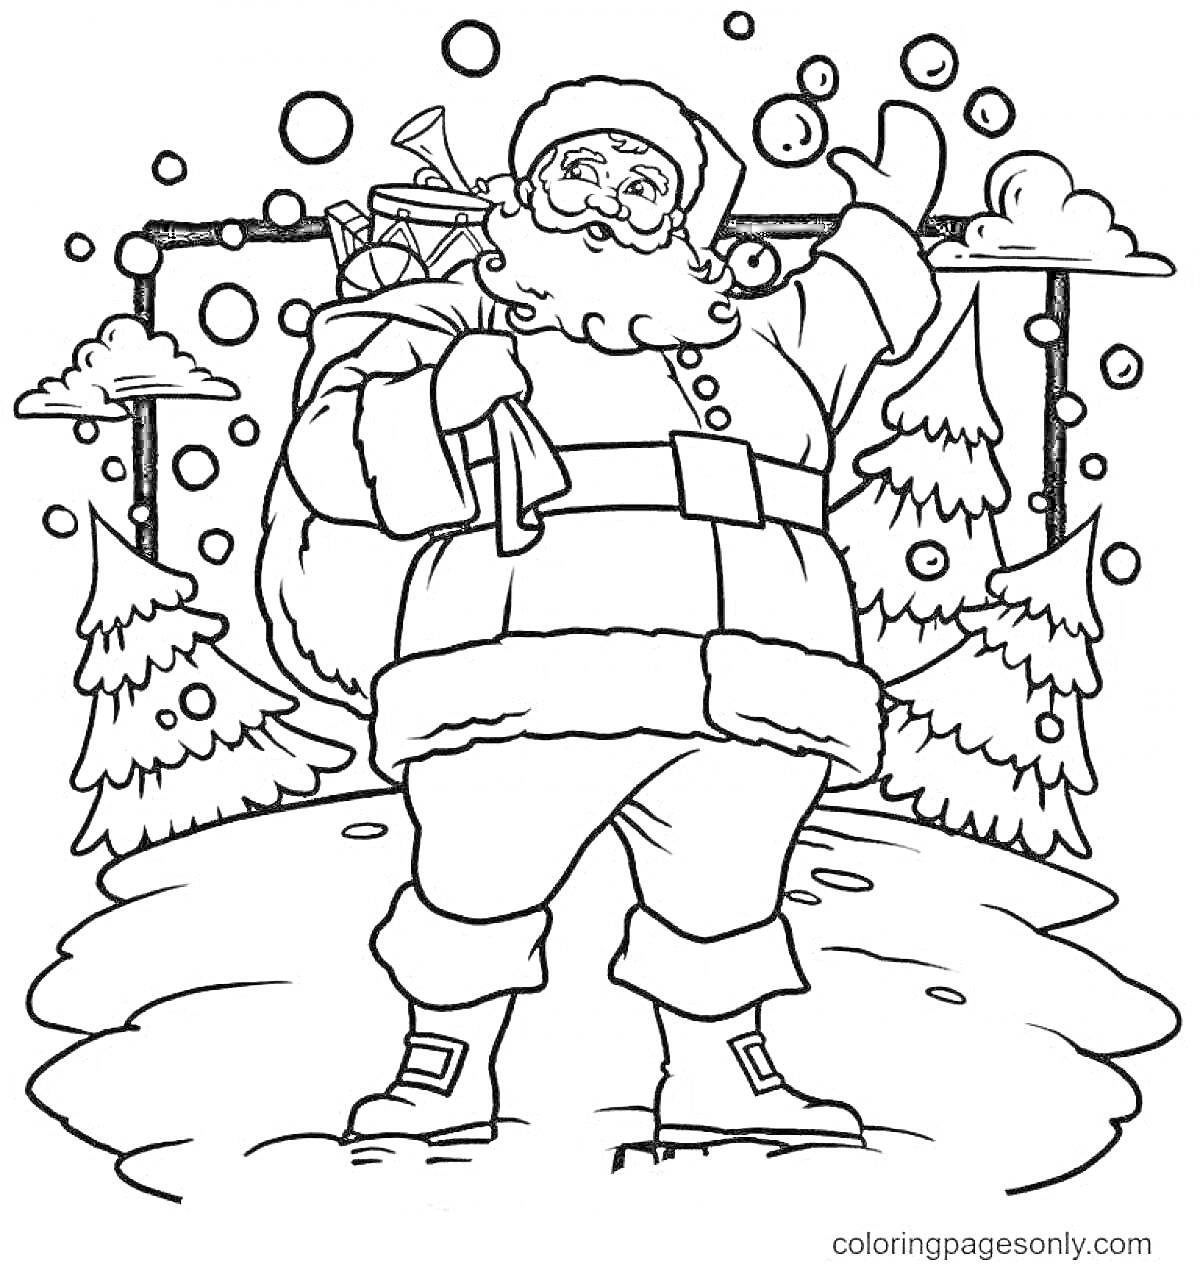 На раскраске изображено: Рождество, Снег, Елки, Подарки, Зима, Мешок с подарками, Новый год, Праздники, Санта Клаус